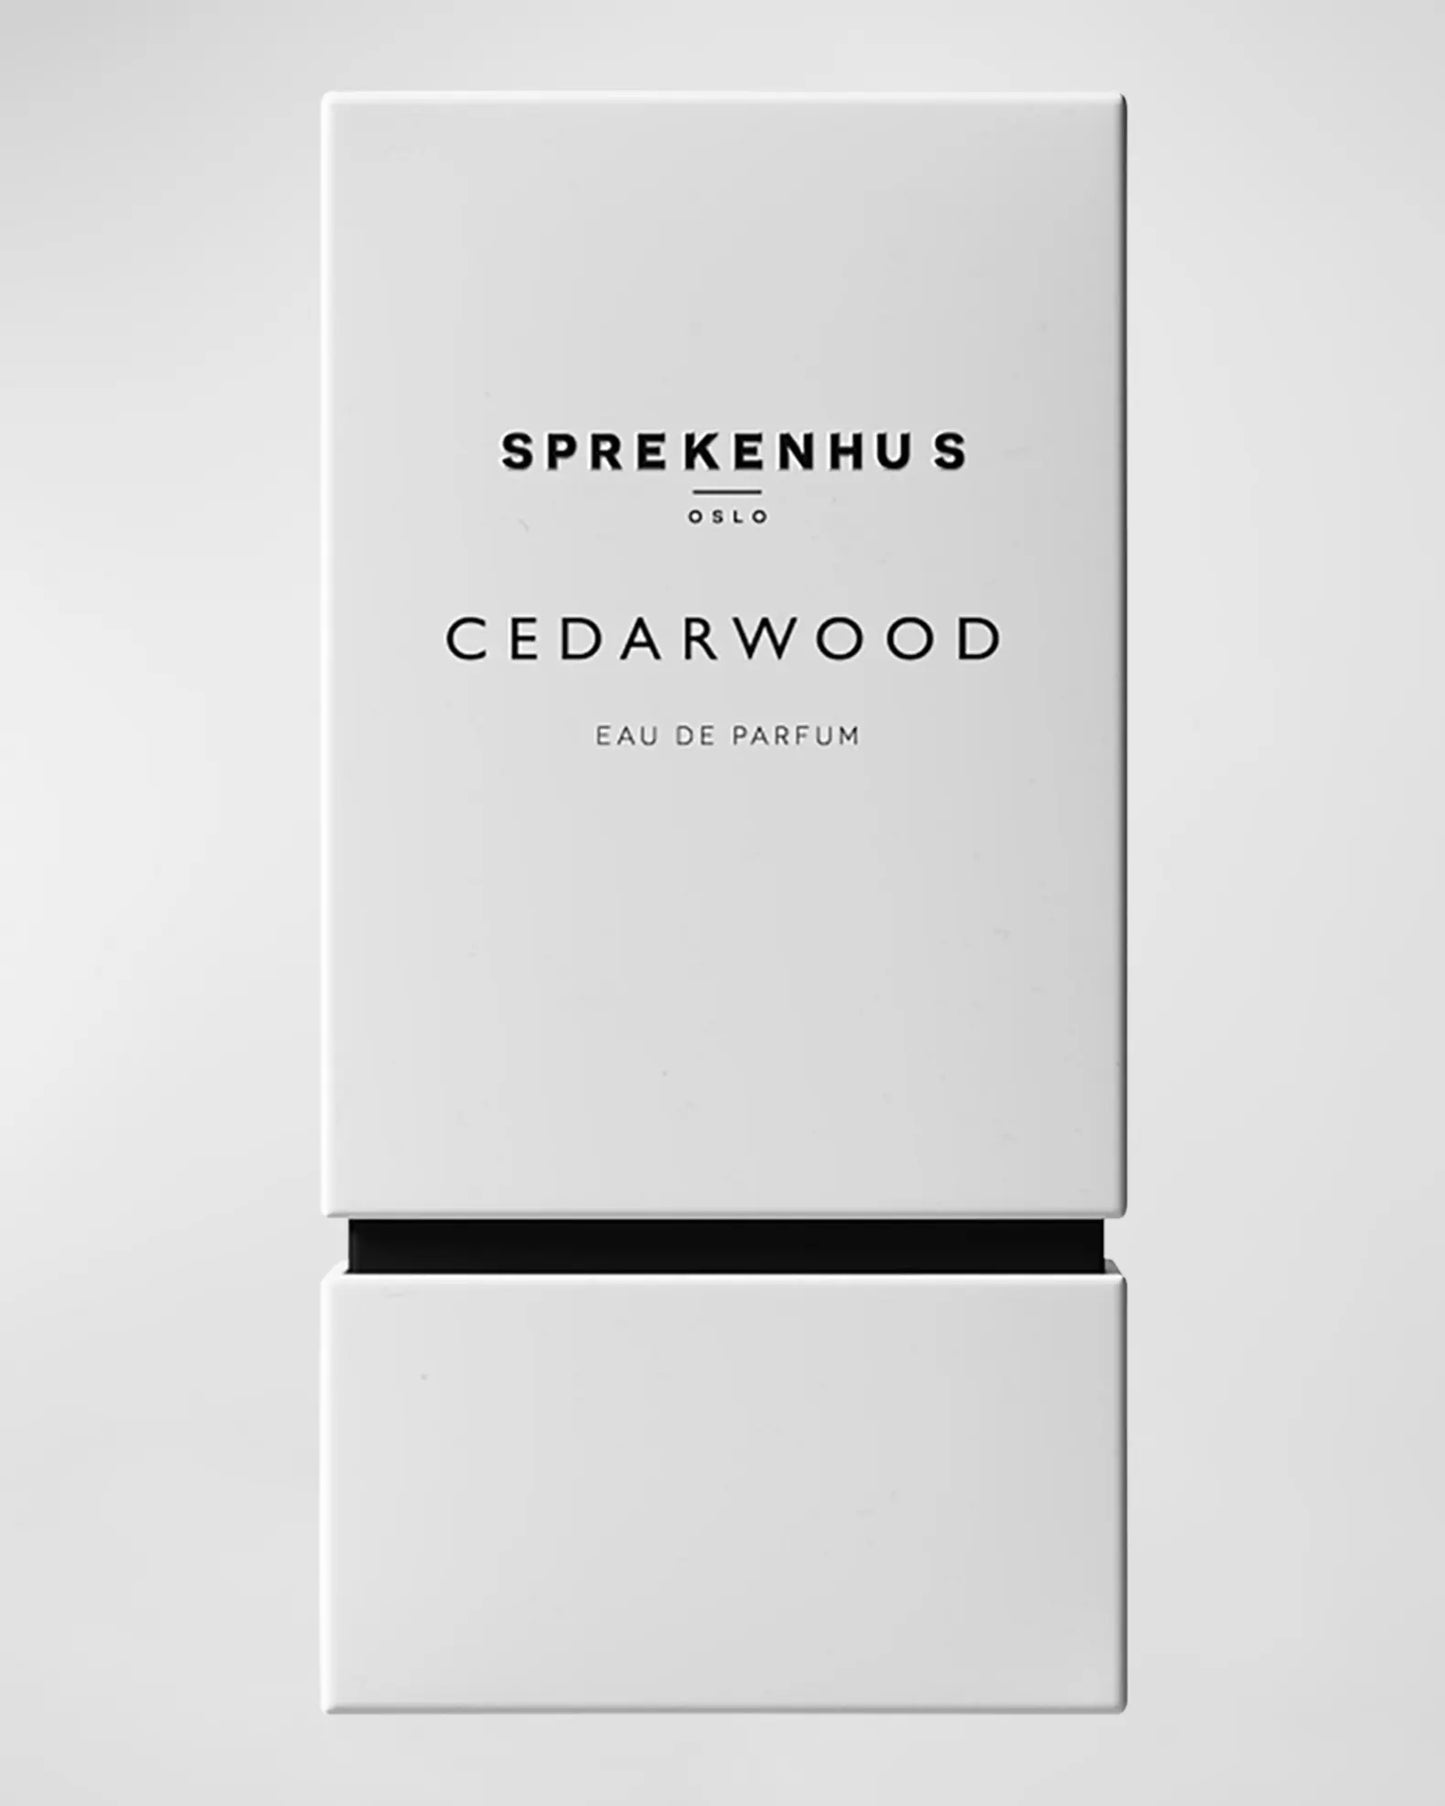 SPREKENHUS CEDARWOOD EAU DE PARFUM 3.4 oz. - $254.00